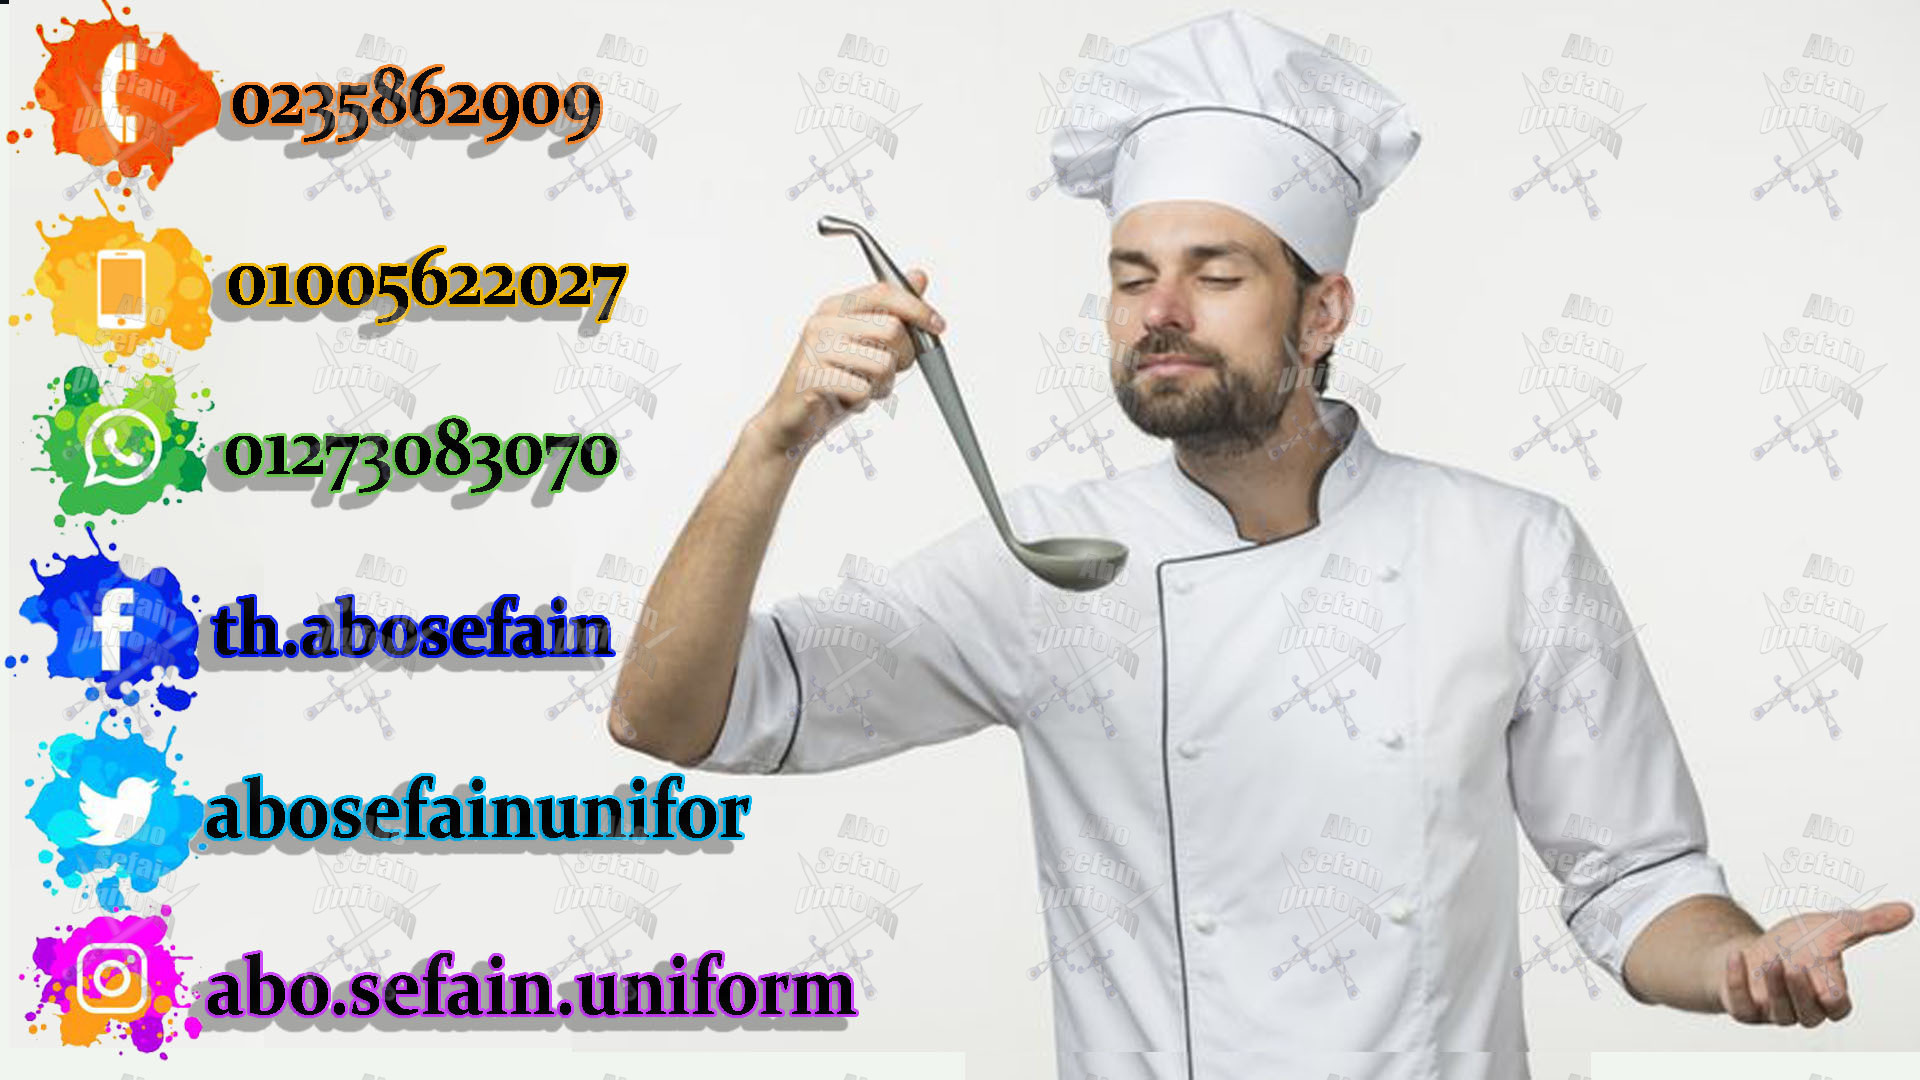  chef uniforms - restaurant uniform